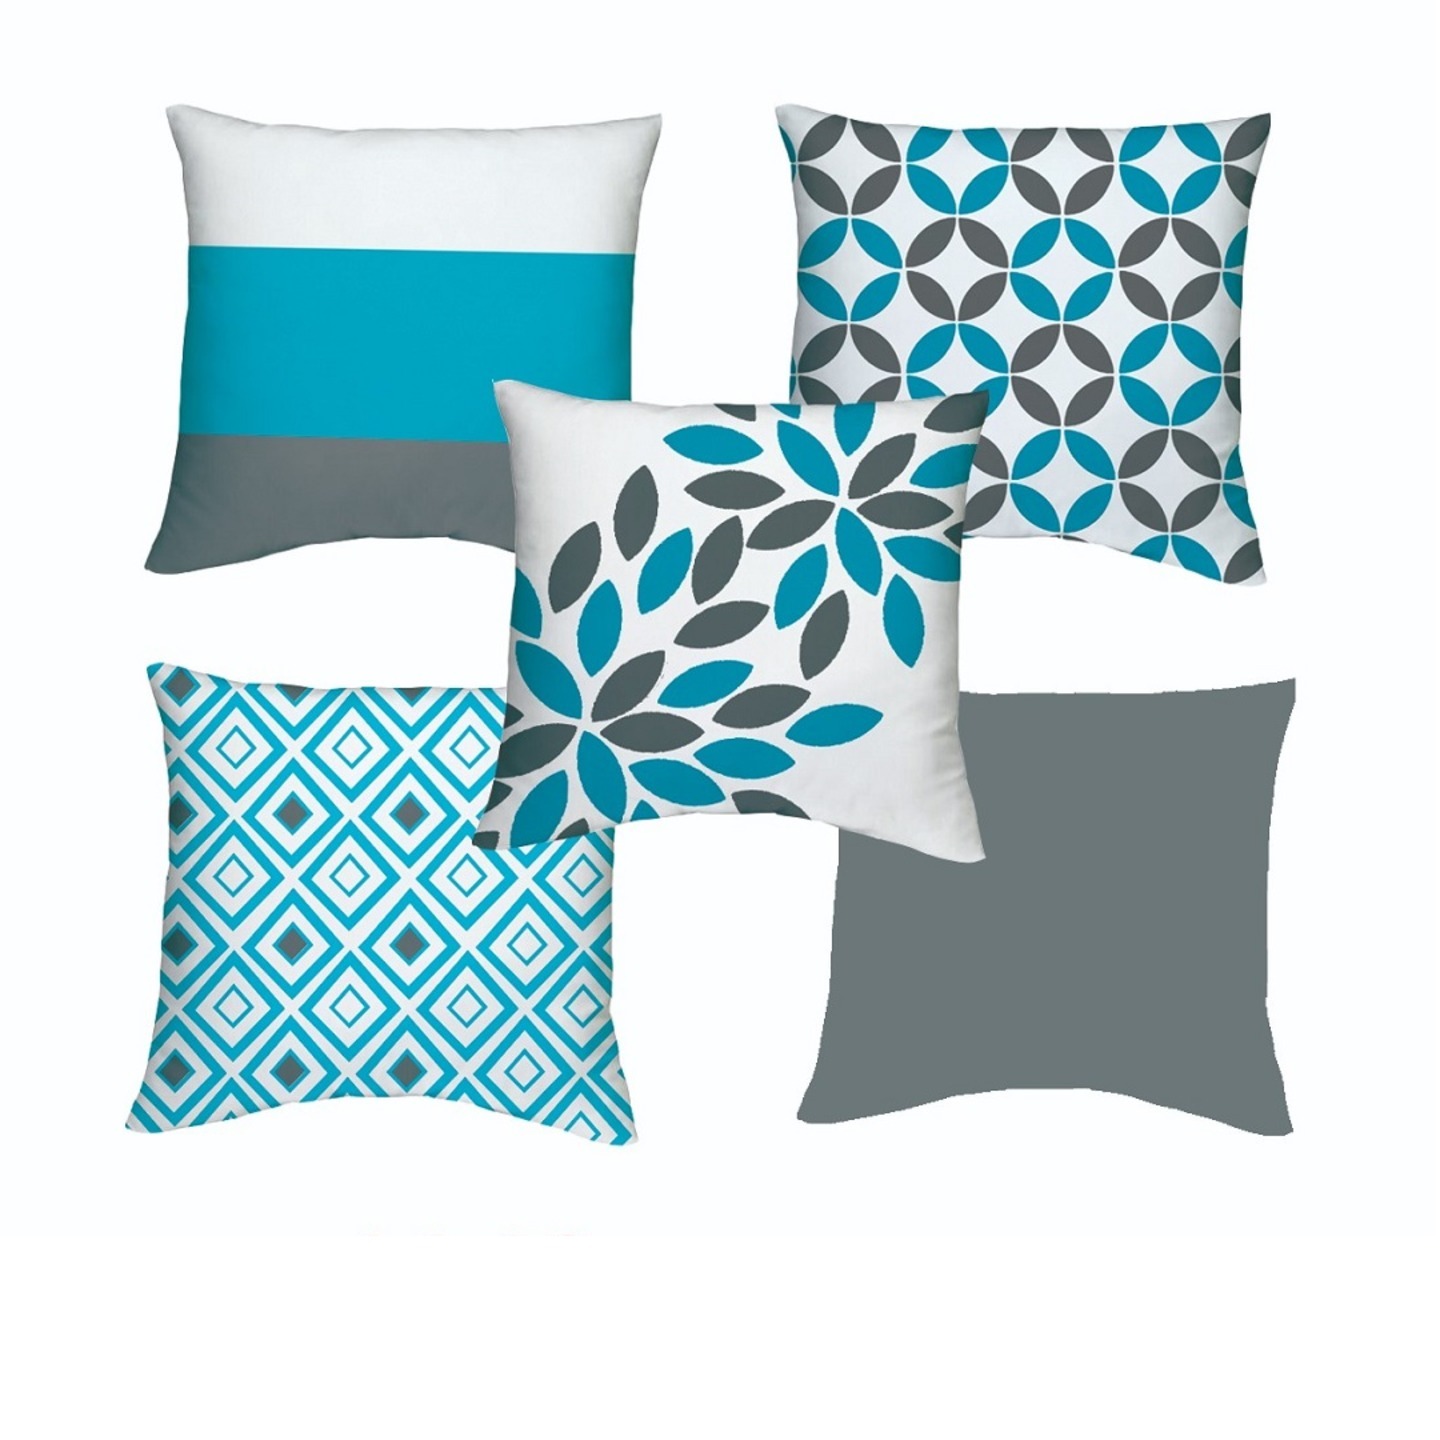 Handtex Home Jute Fabric Printed Cushion Covers, Set of 5, 16 x 16 inch 40.6 x 40.6 cm